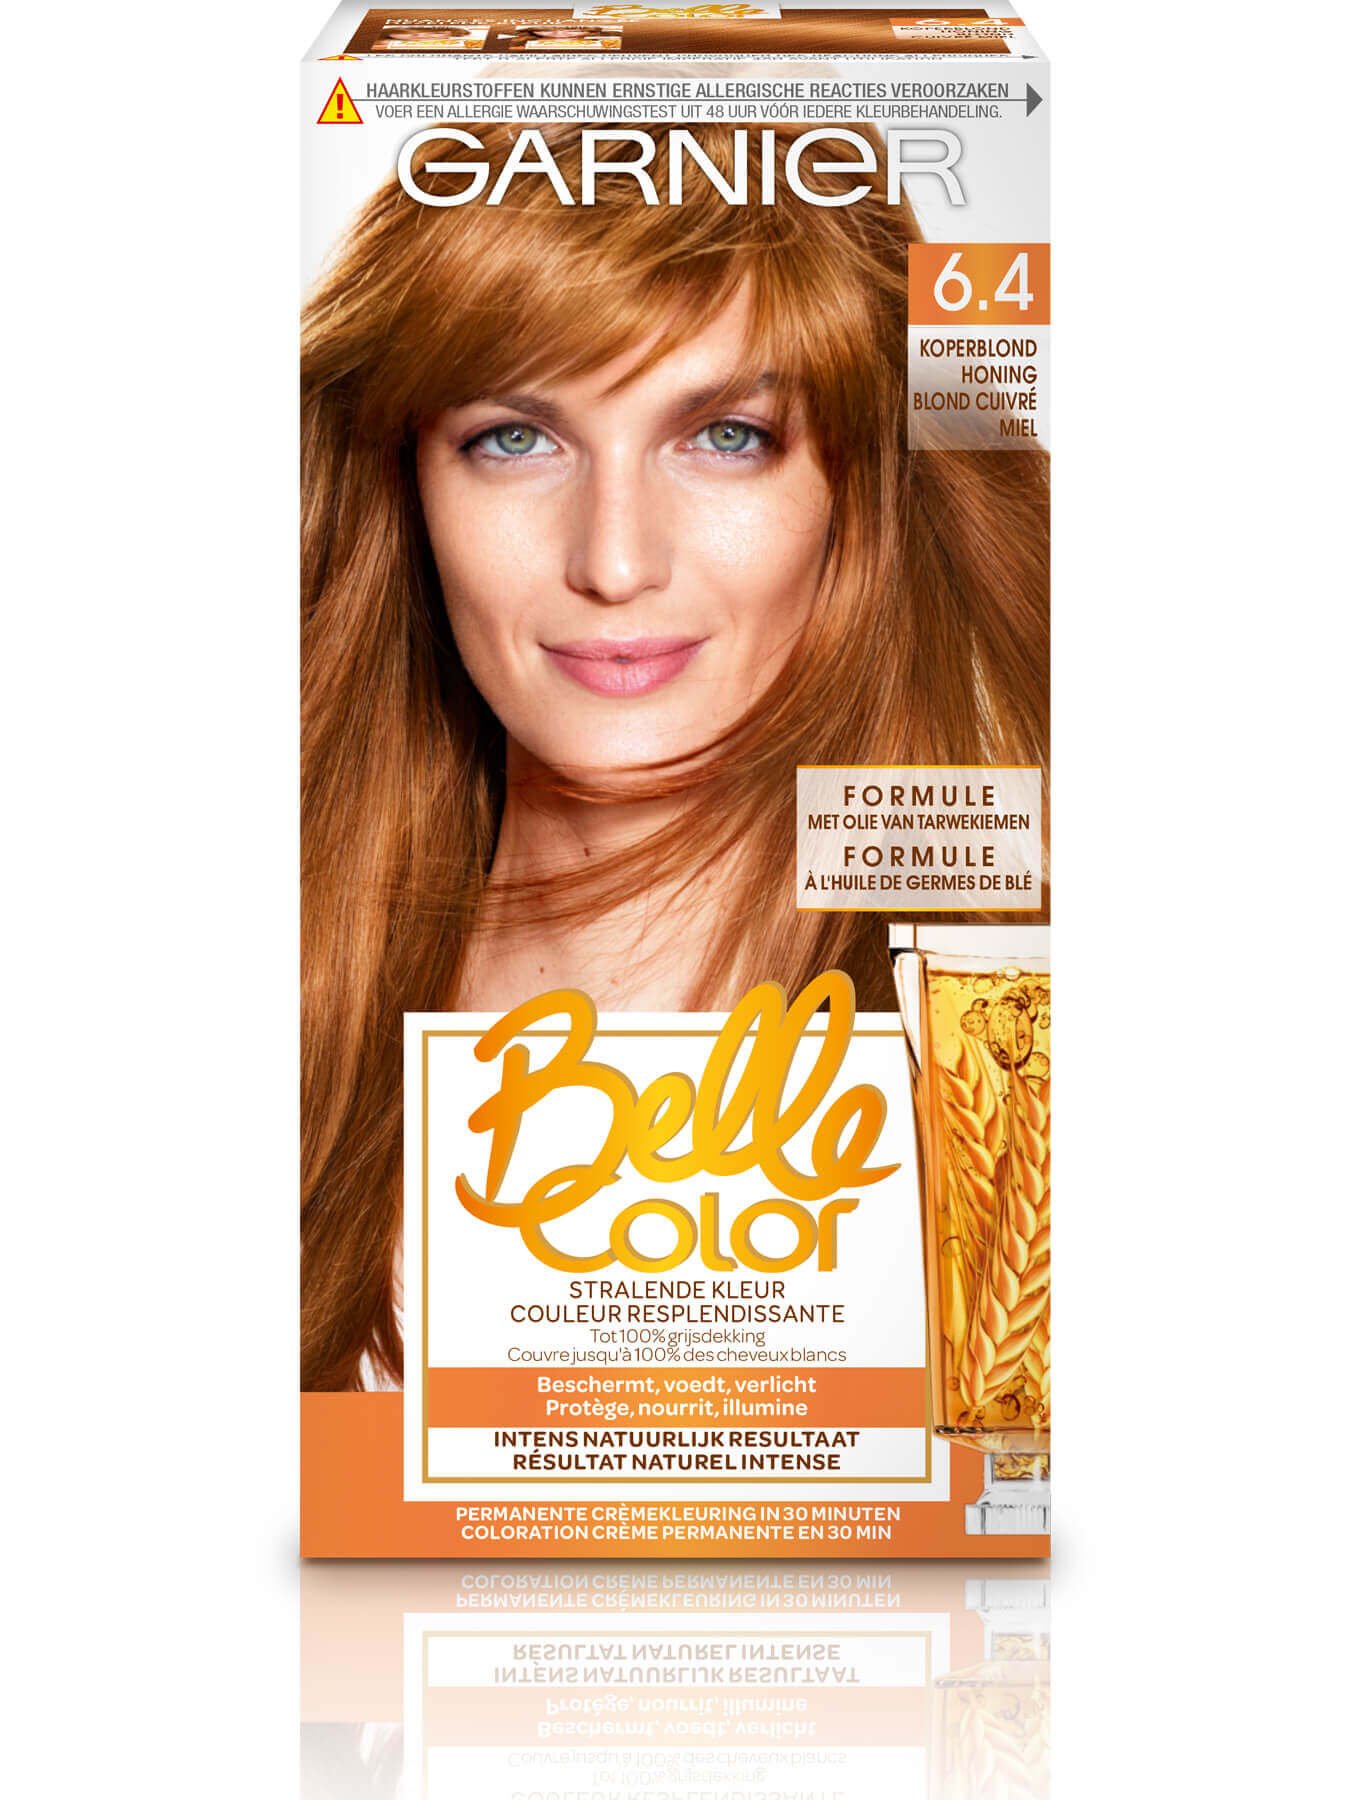 Belle Color 6.4 - Koper honingblond Garnier